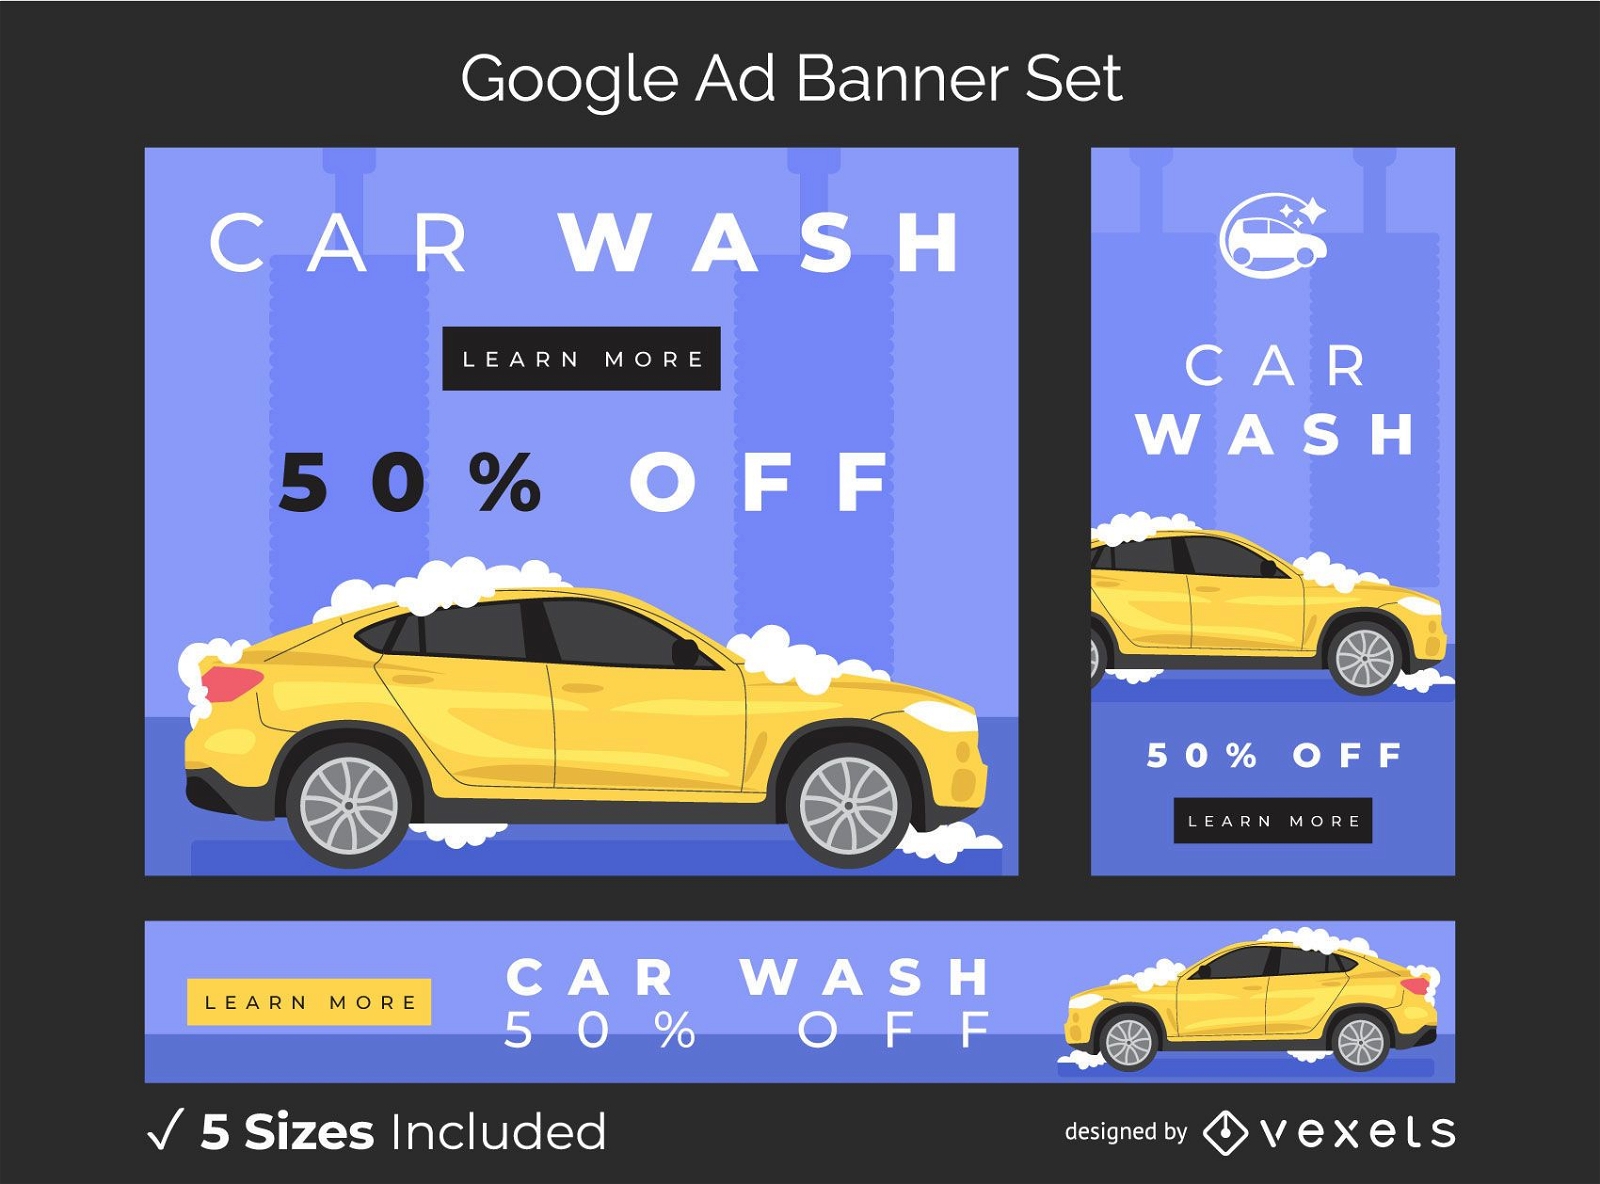 Conjunto de banners de anúncios para lavagem de carros